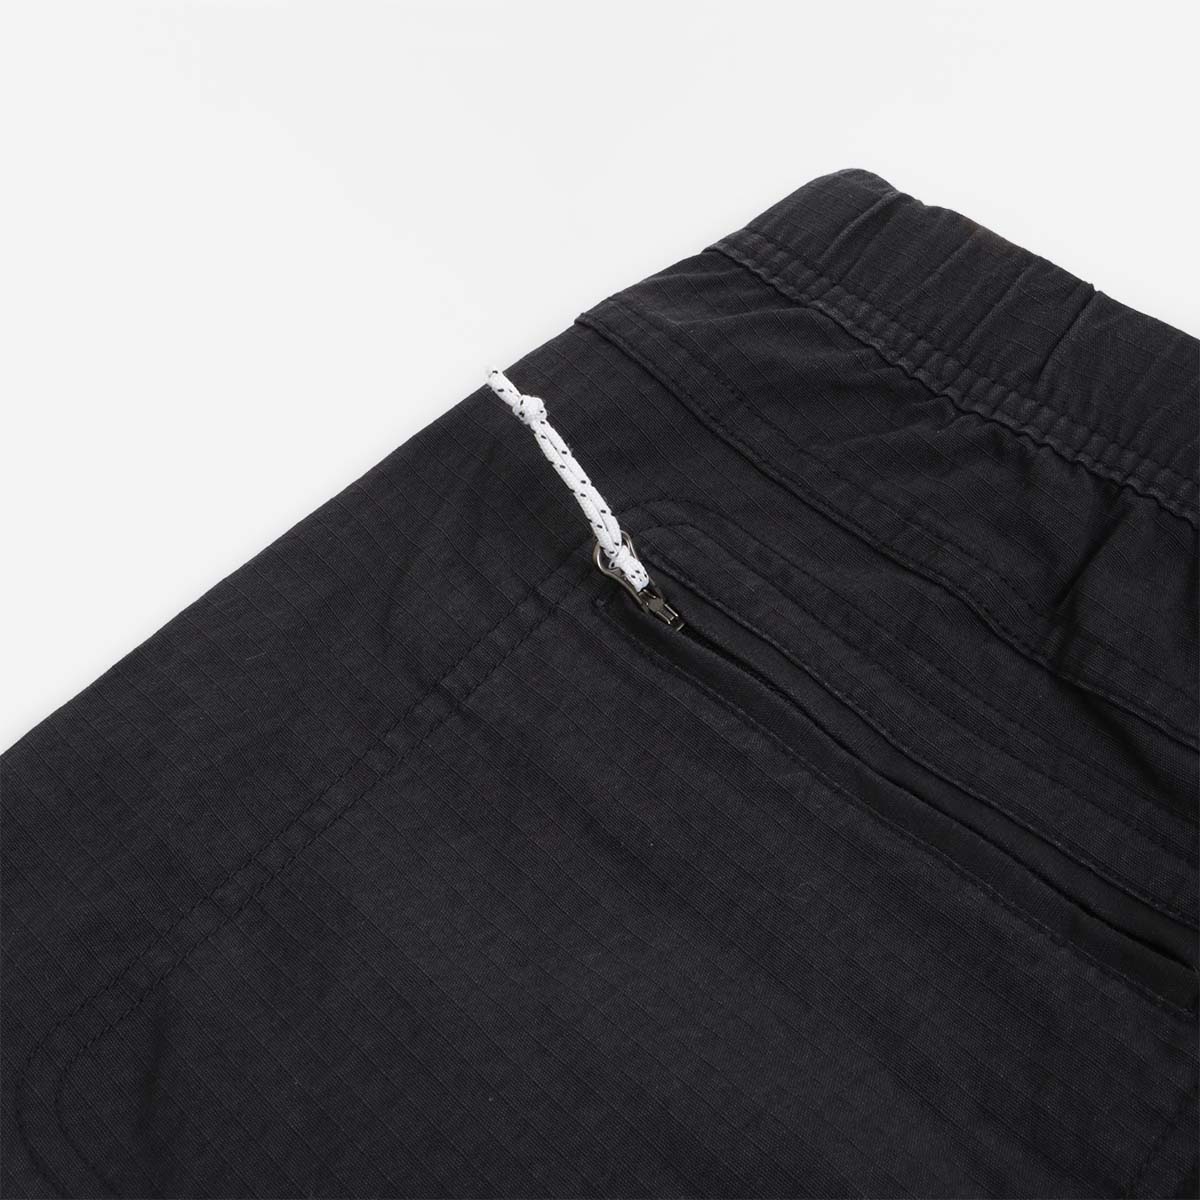 Topo Designs Mountain Ripstop Shorts, Black, Detail Shot 6